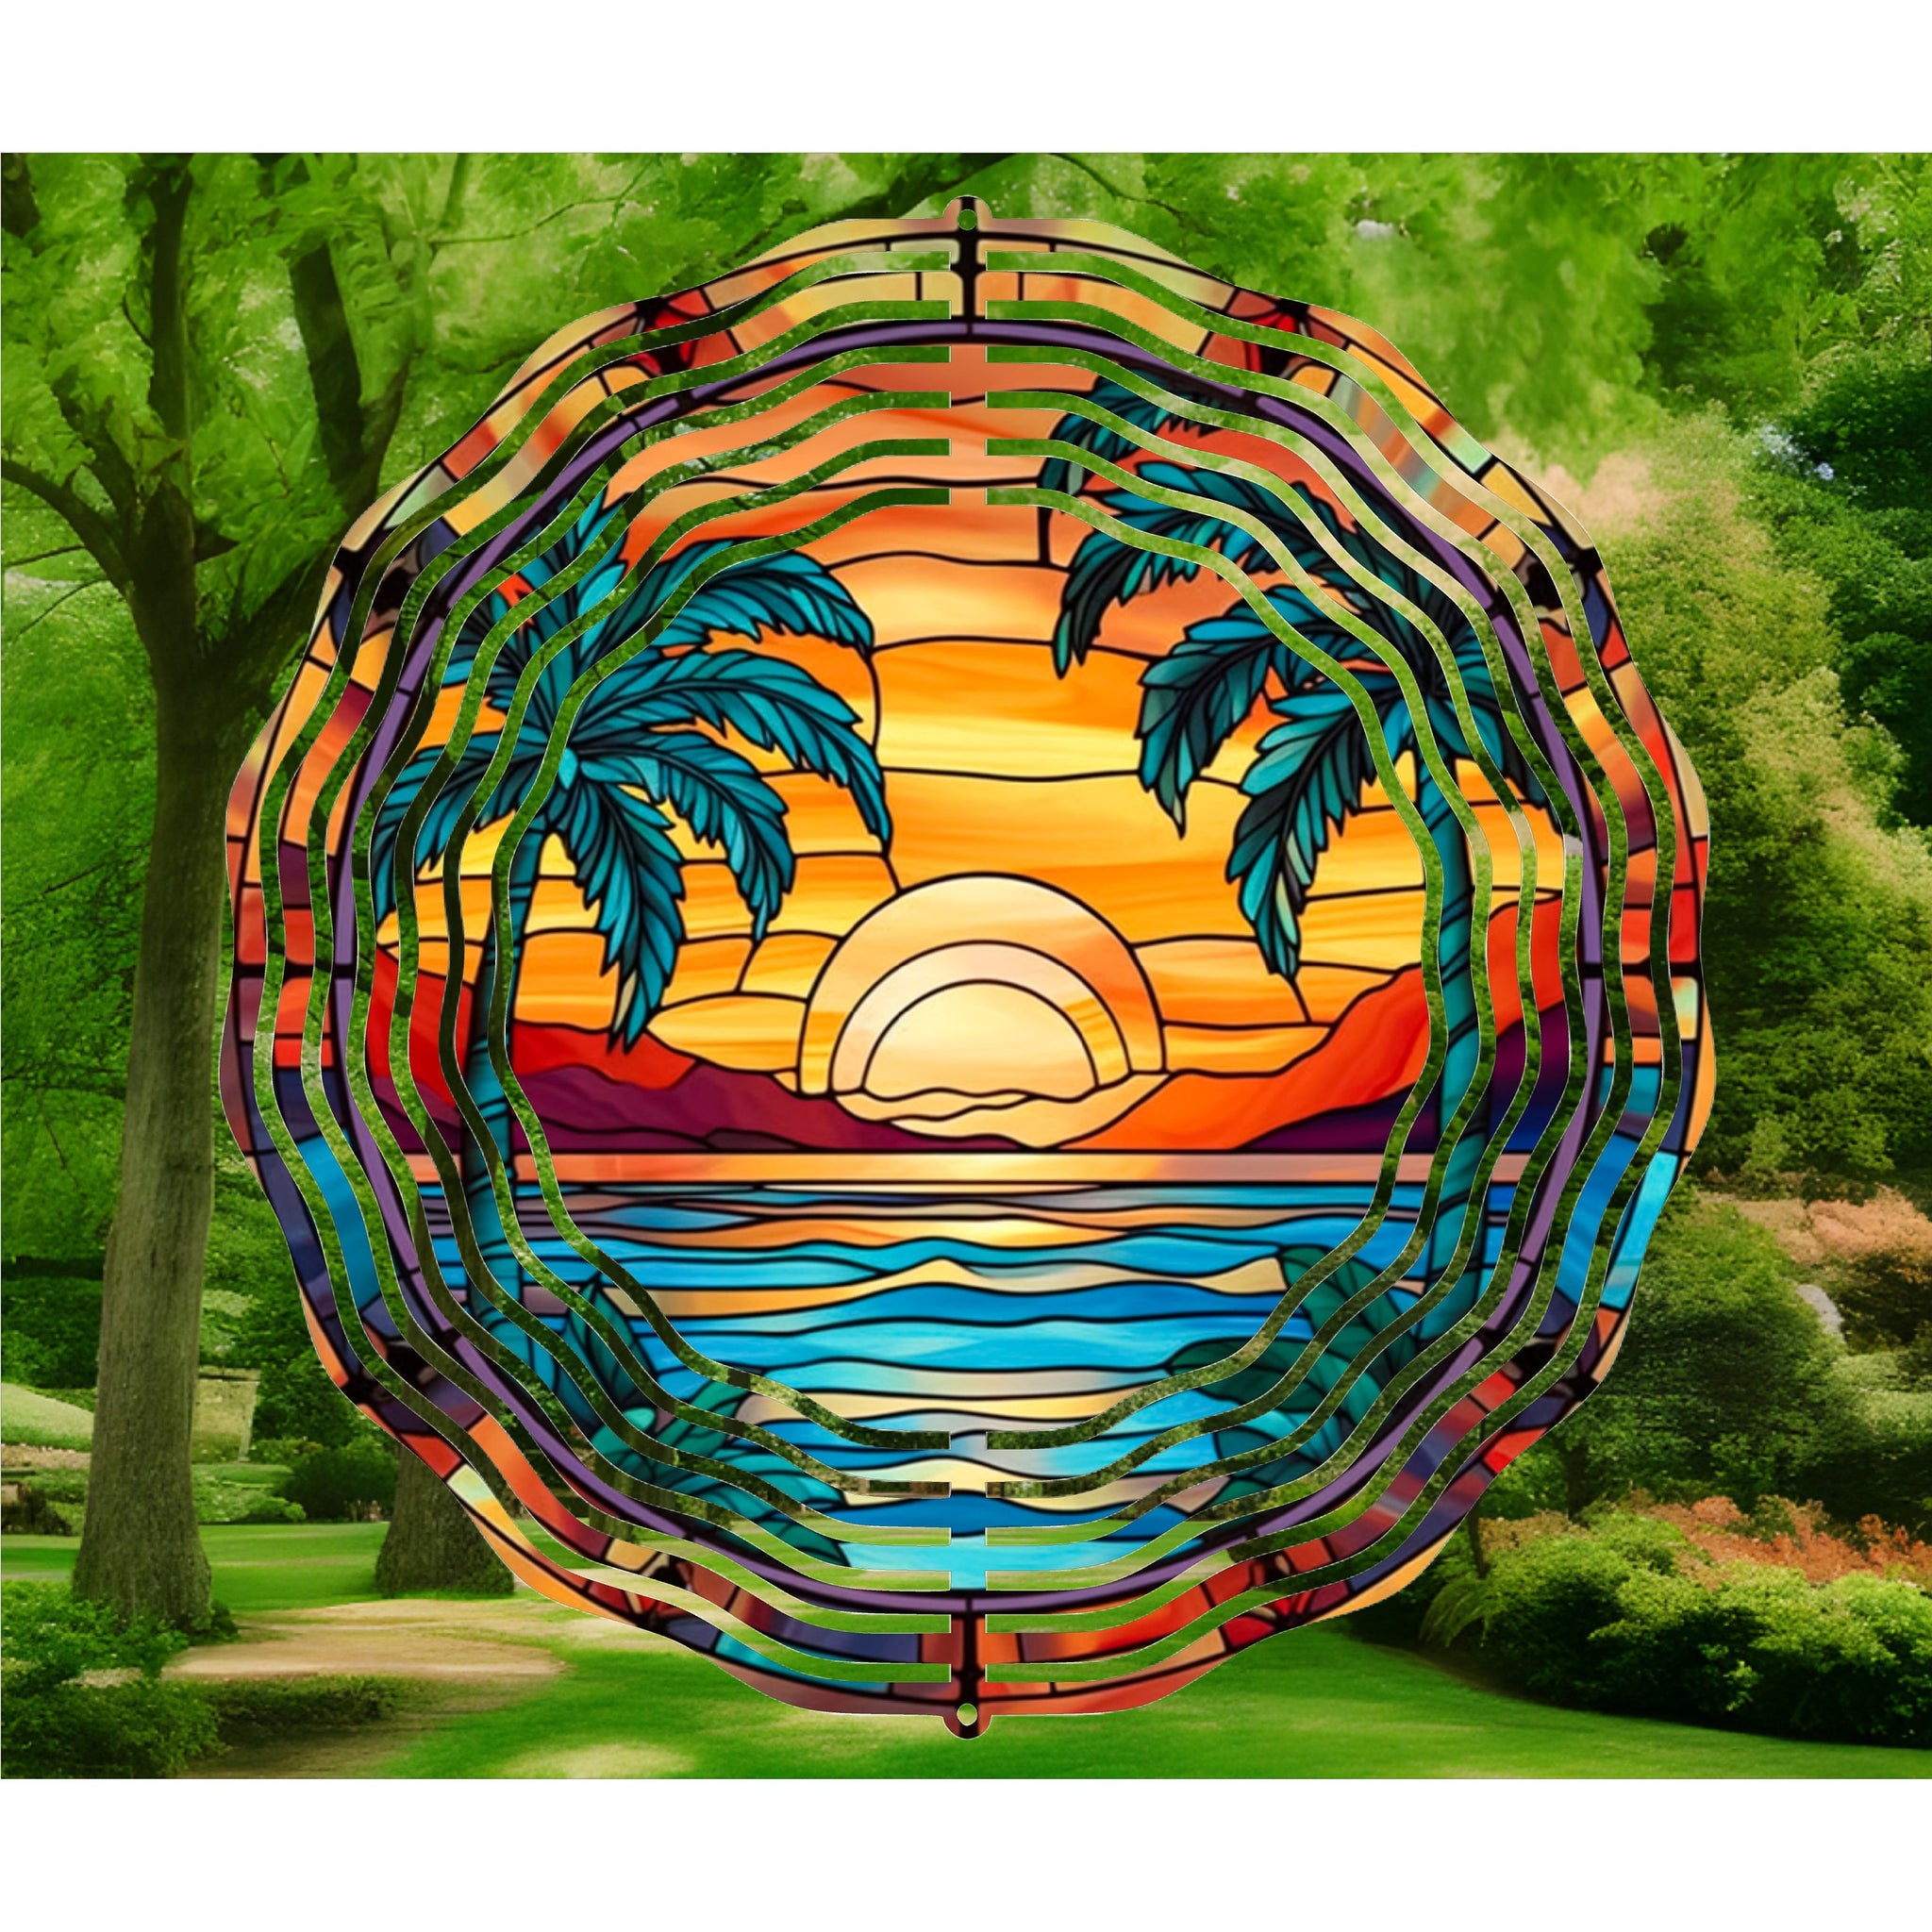 Tropical Stain Glass, Wind Spinner, Yard Art, Garden Decor, WindSpinner